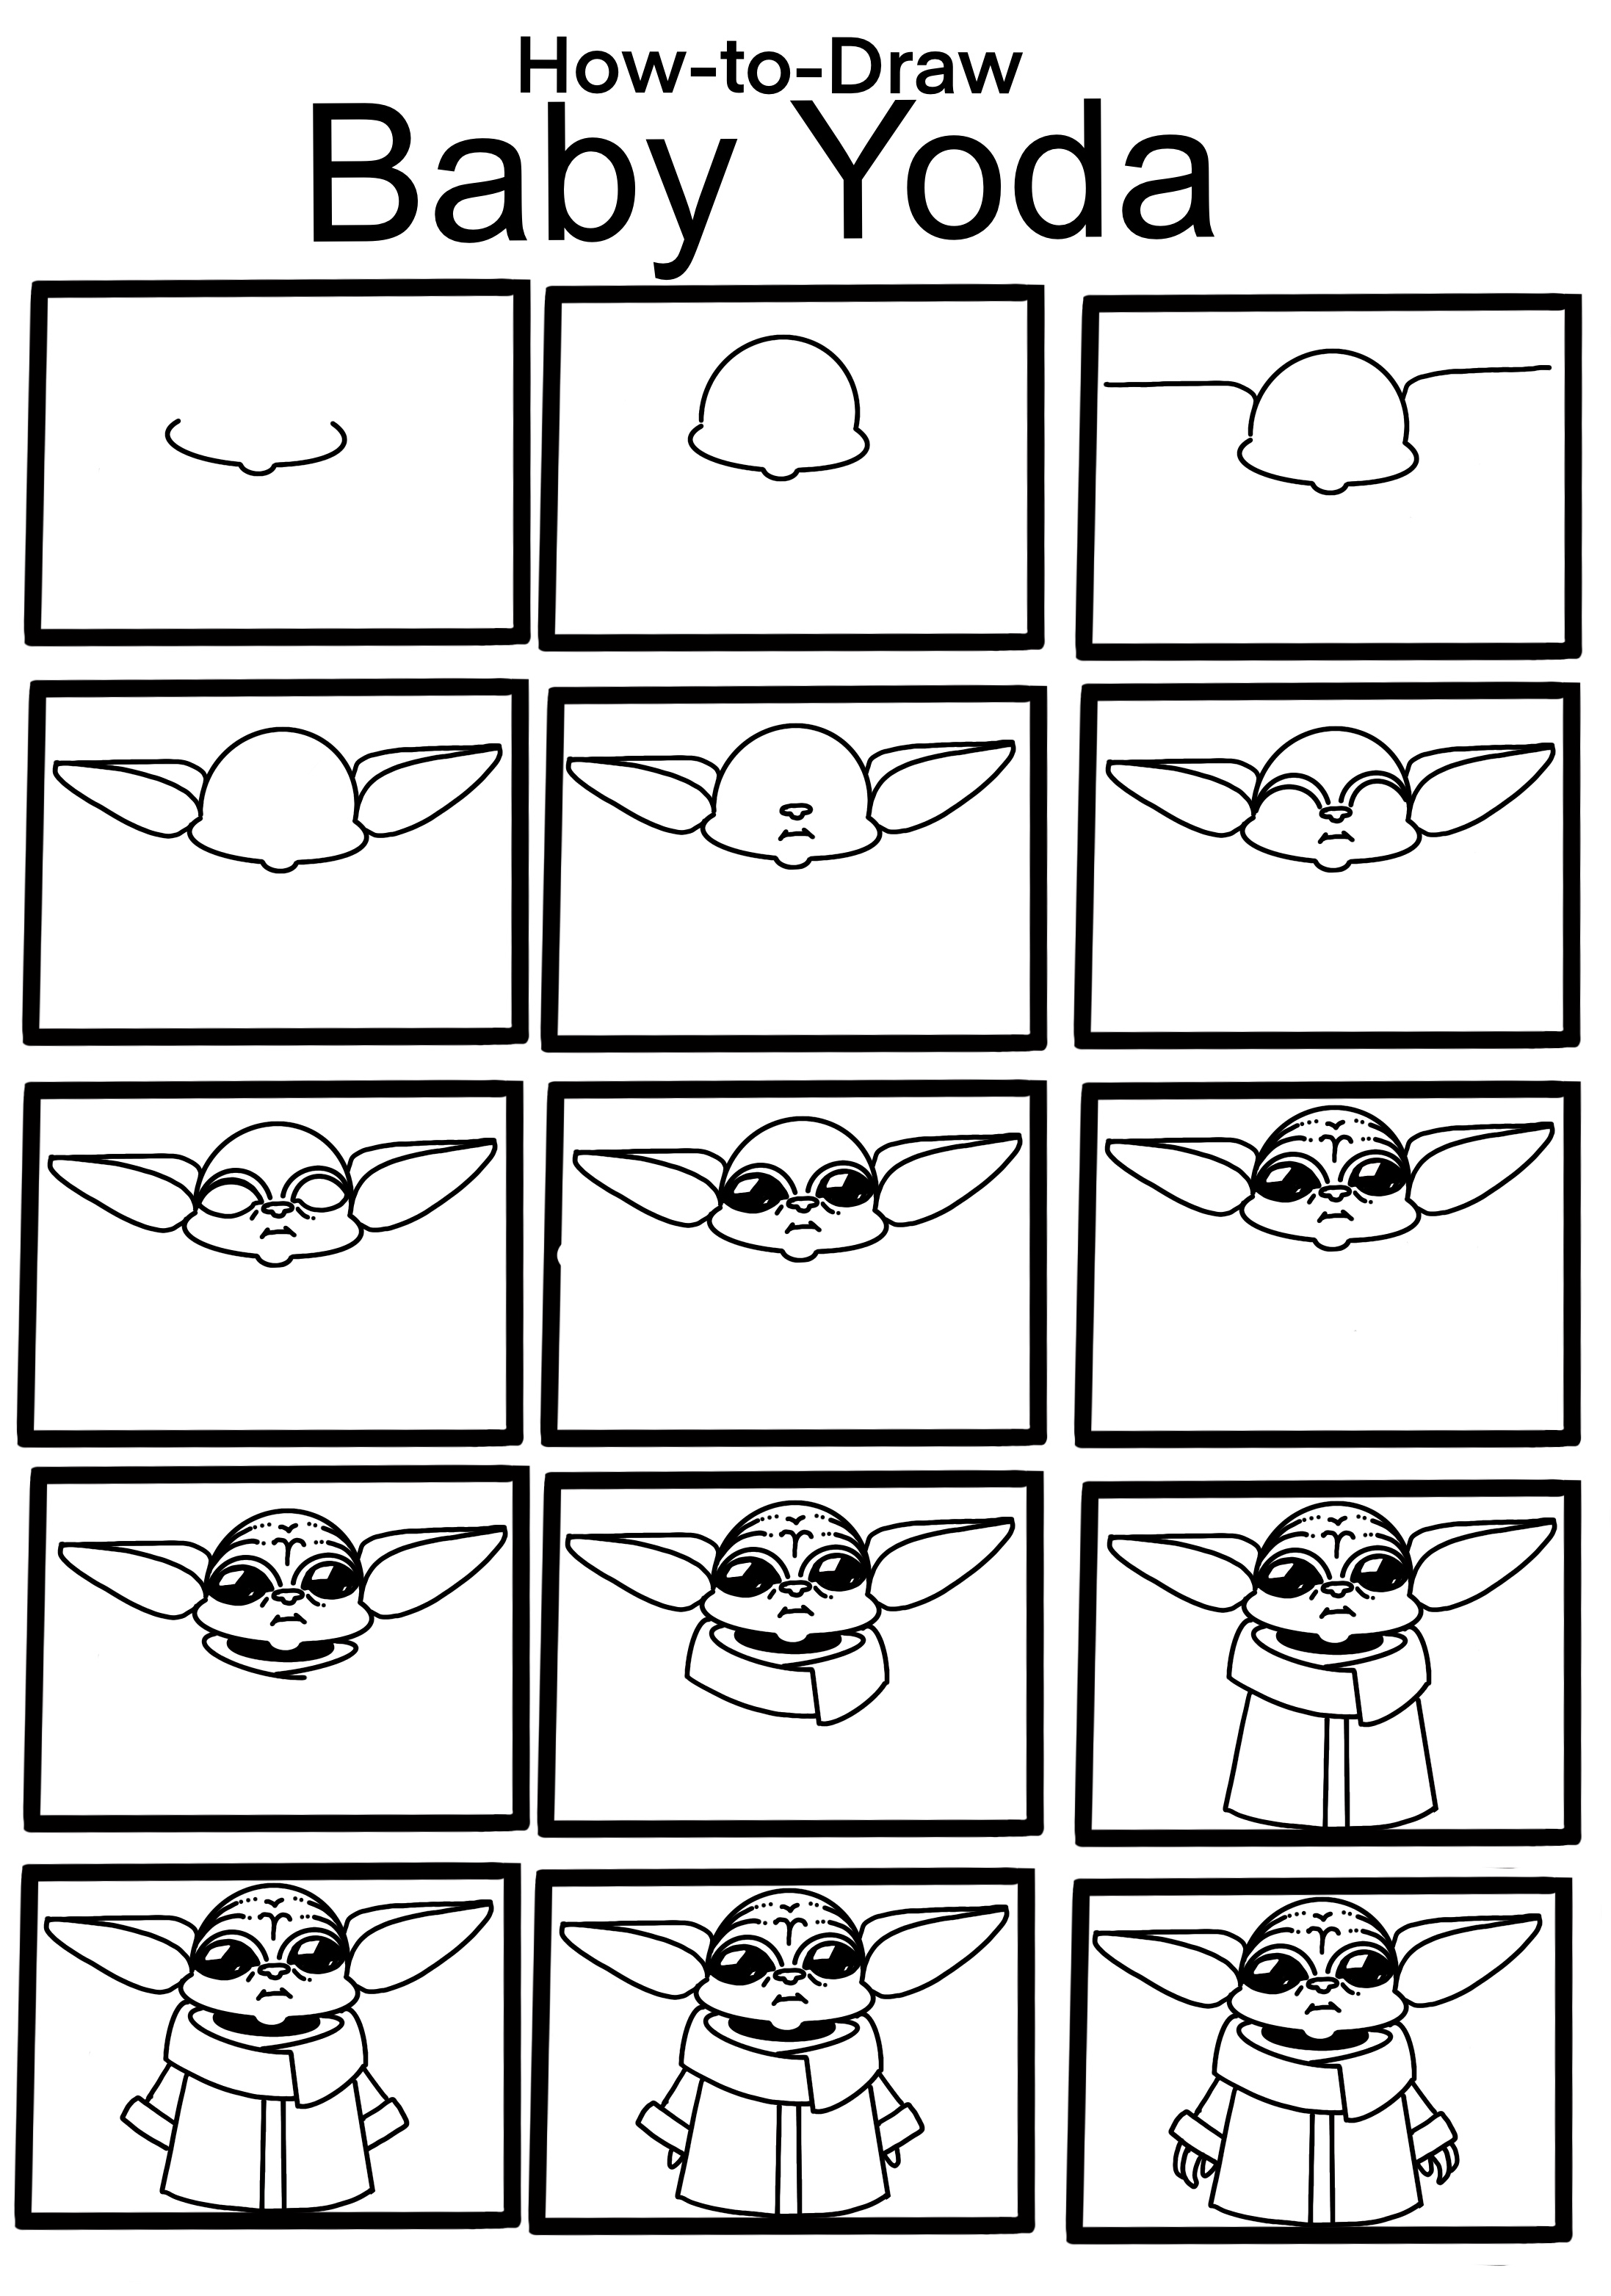 How to Draw Baby Yoda